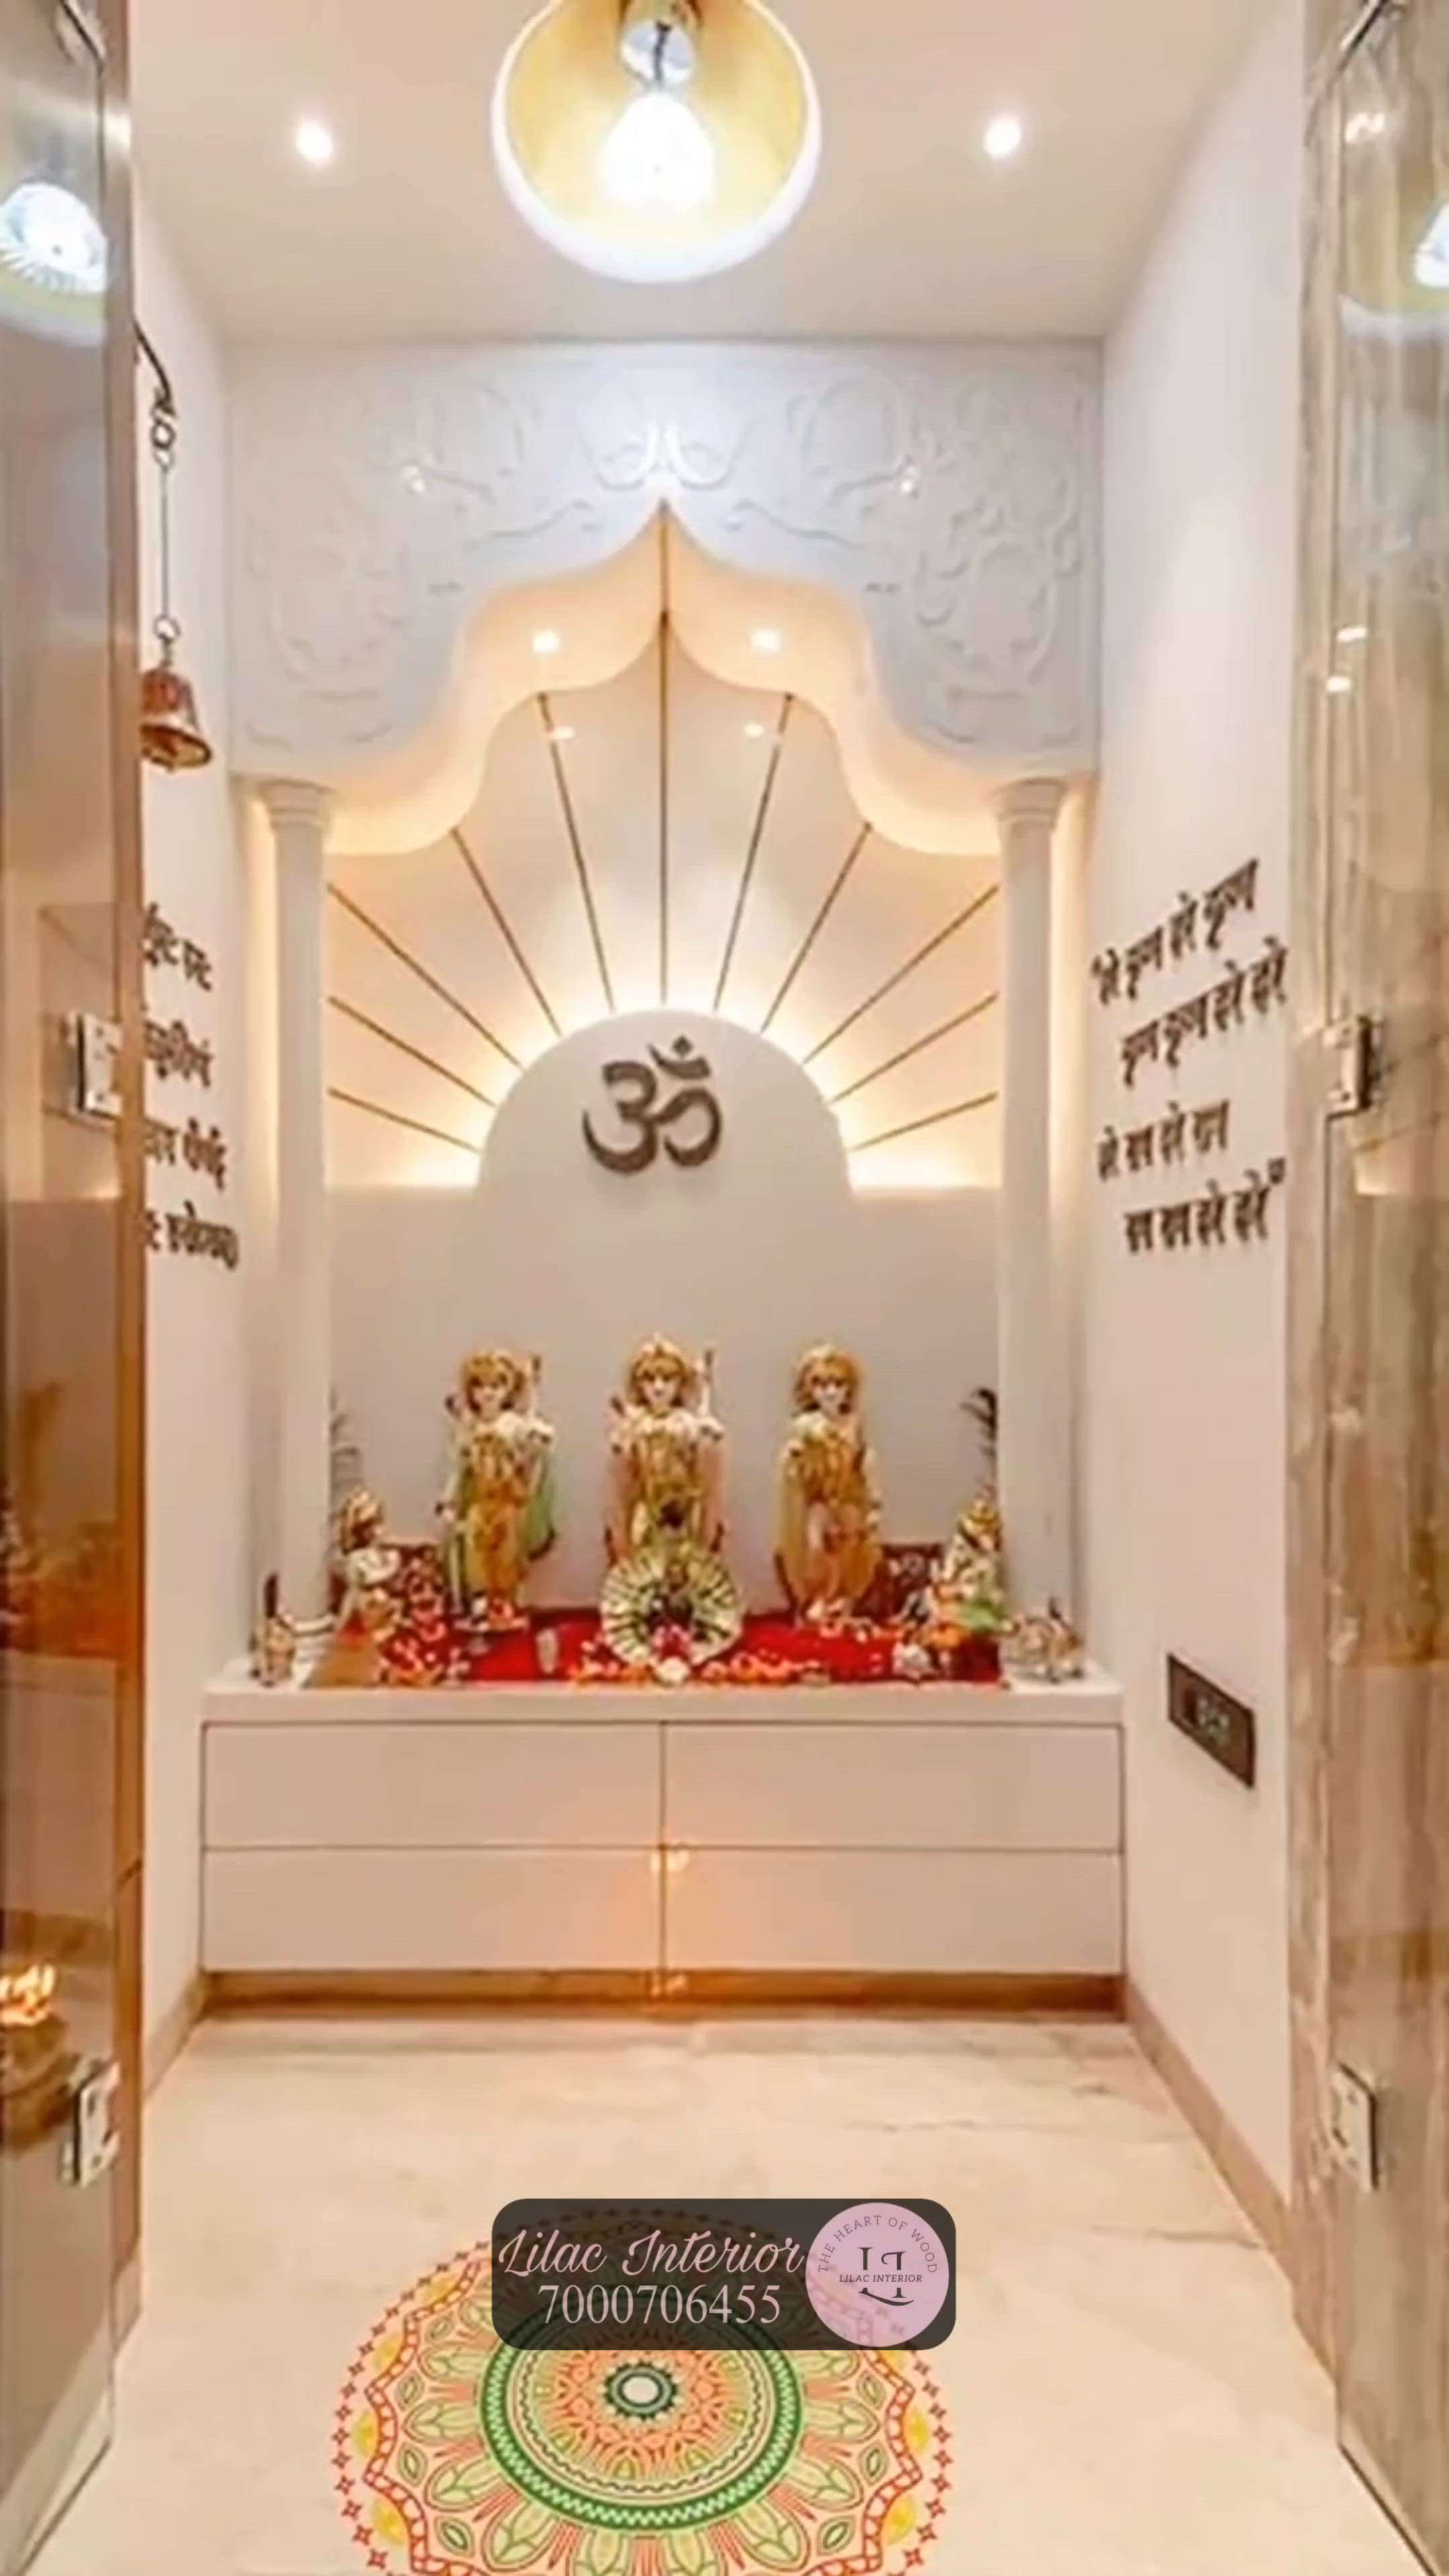 Trending 5 Pooja Room for Luxurious House ❤️🙏🏻

#luxuriouslife
#luxurytemple
#trending
#trendingreelsvideo
#trendinghomedecor
#trendingdesigns
#designinterior
#walltemple
#reelsinsta
#trendingreelsvideo
#ramaayenge #ram #ramcharan
#ramsita #krishna #ganesh
#shiv #sankar #templedesign #temple
#hindutemple #iskcontemple #templedesign #designerinterior #interiordesignideas #interiordesigninspiration #inspiration